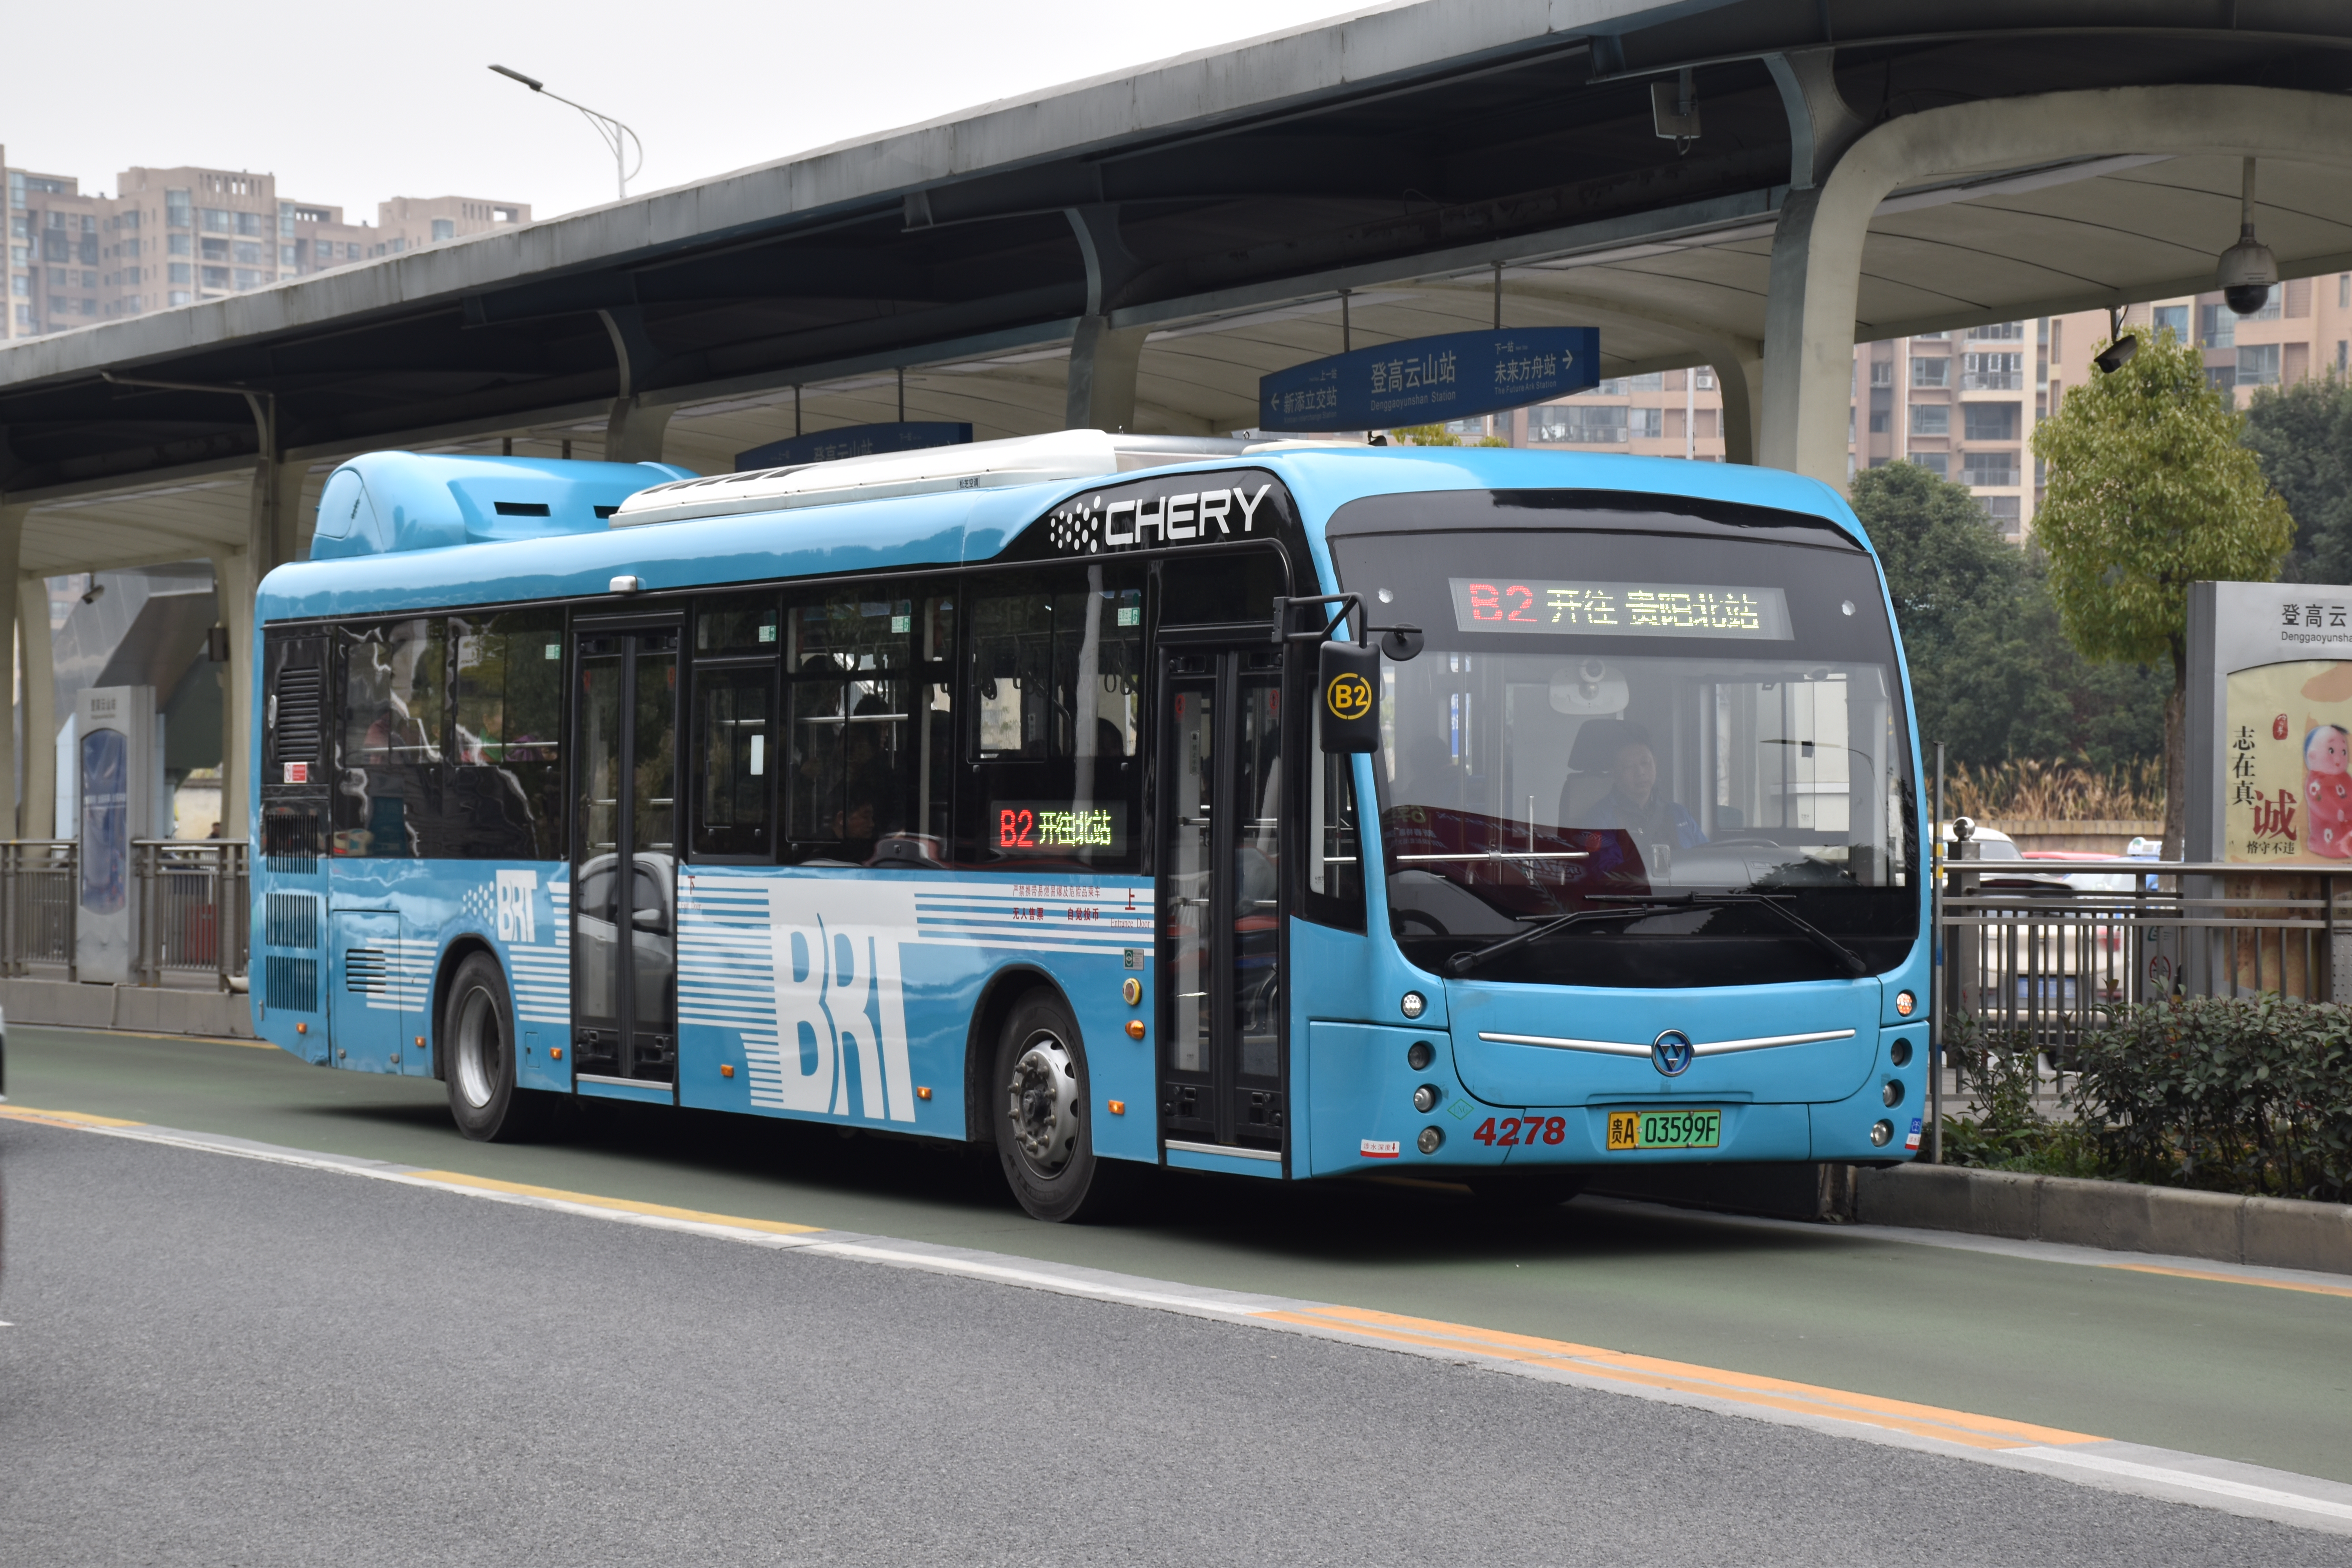 File Guiyang Bus Rapid Transit Route B2 03599f Jpg Wikimedia Commons